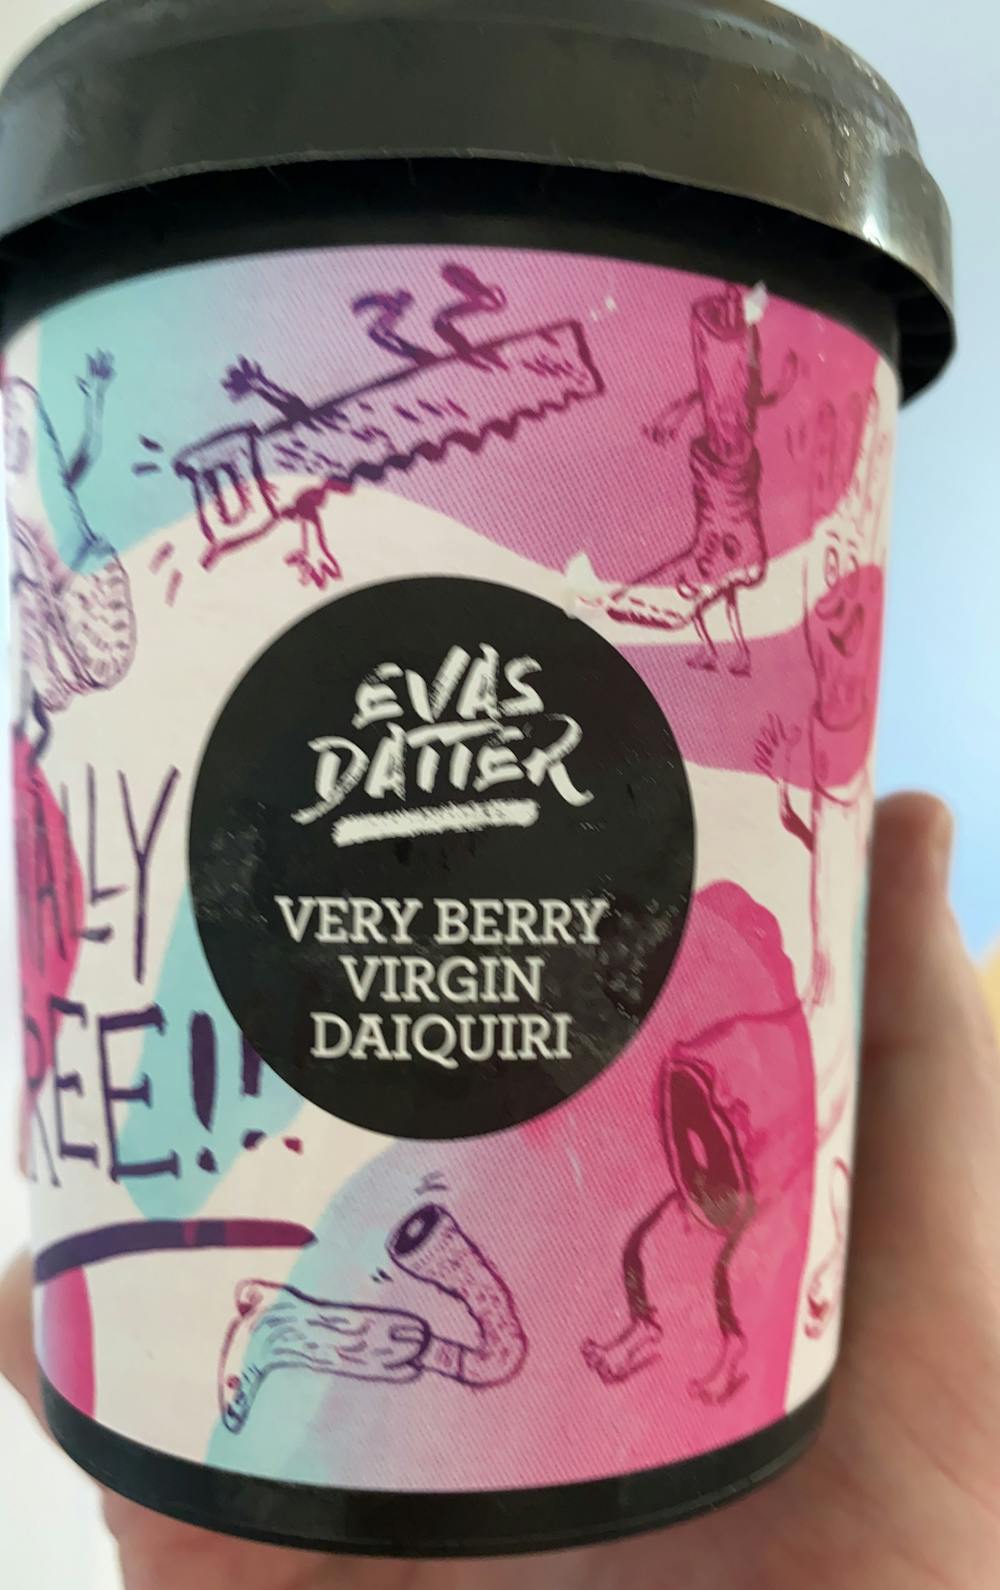 Very berry virgin daiquiri, Evas datter